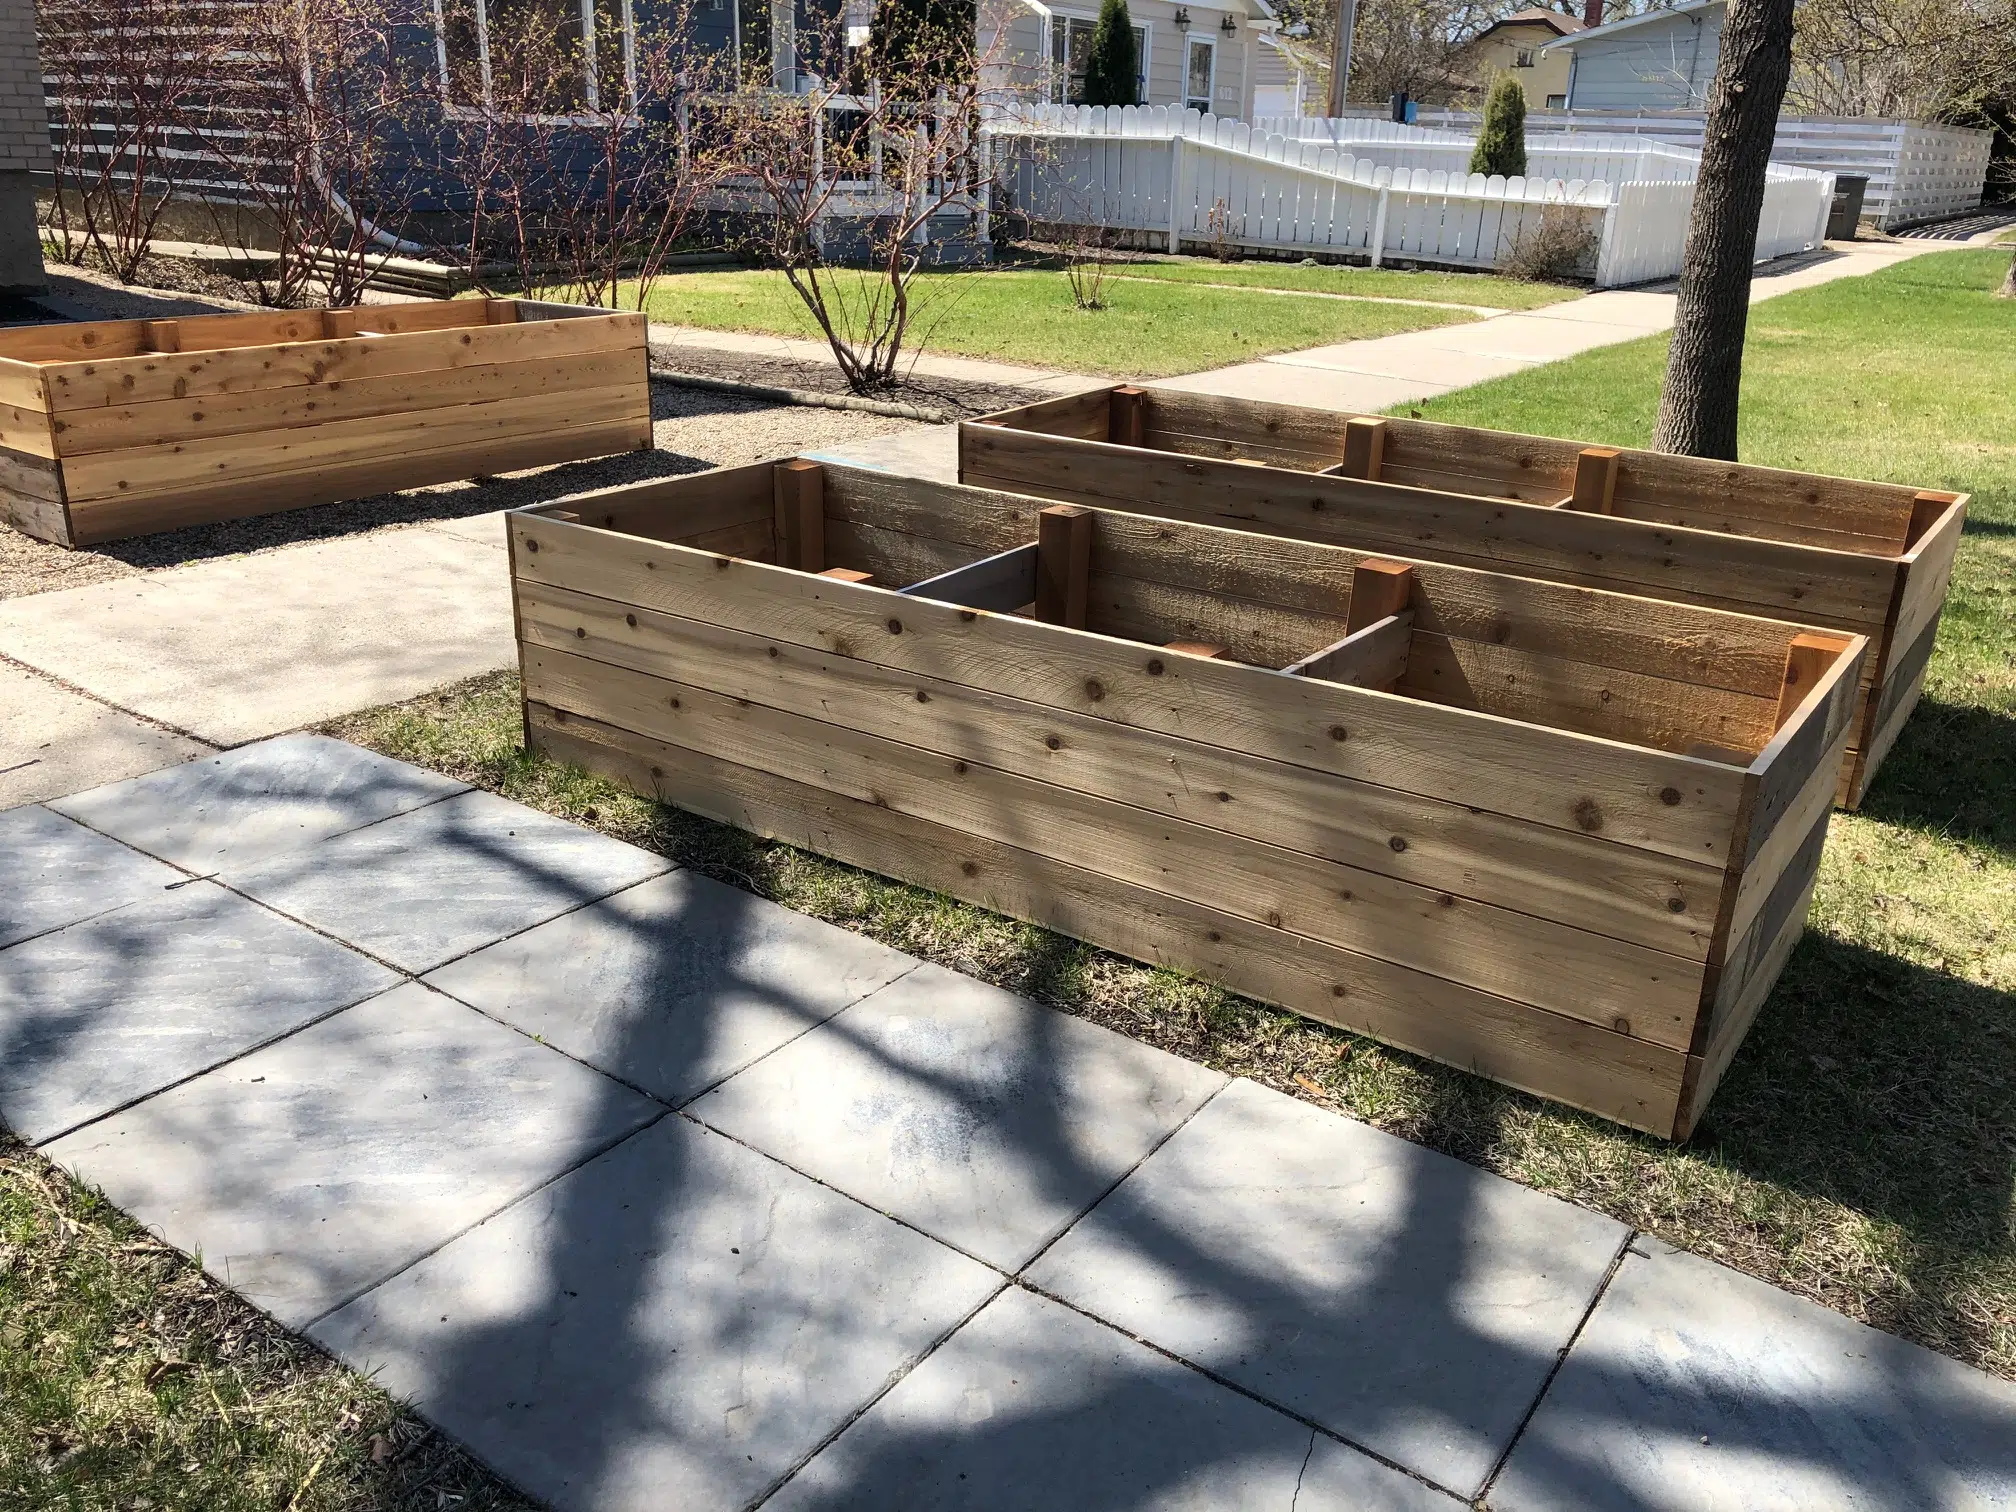 Saskatoon couple puzzled over city bylaw citation for boulevard planter boxes